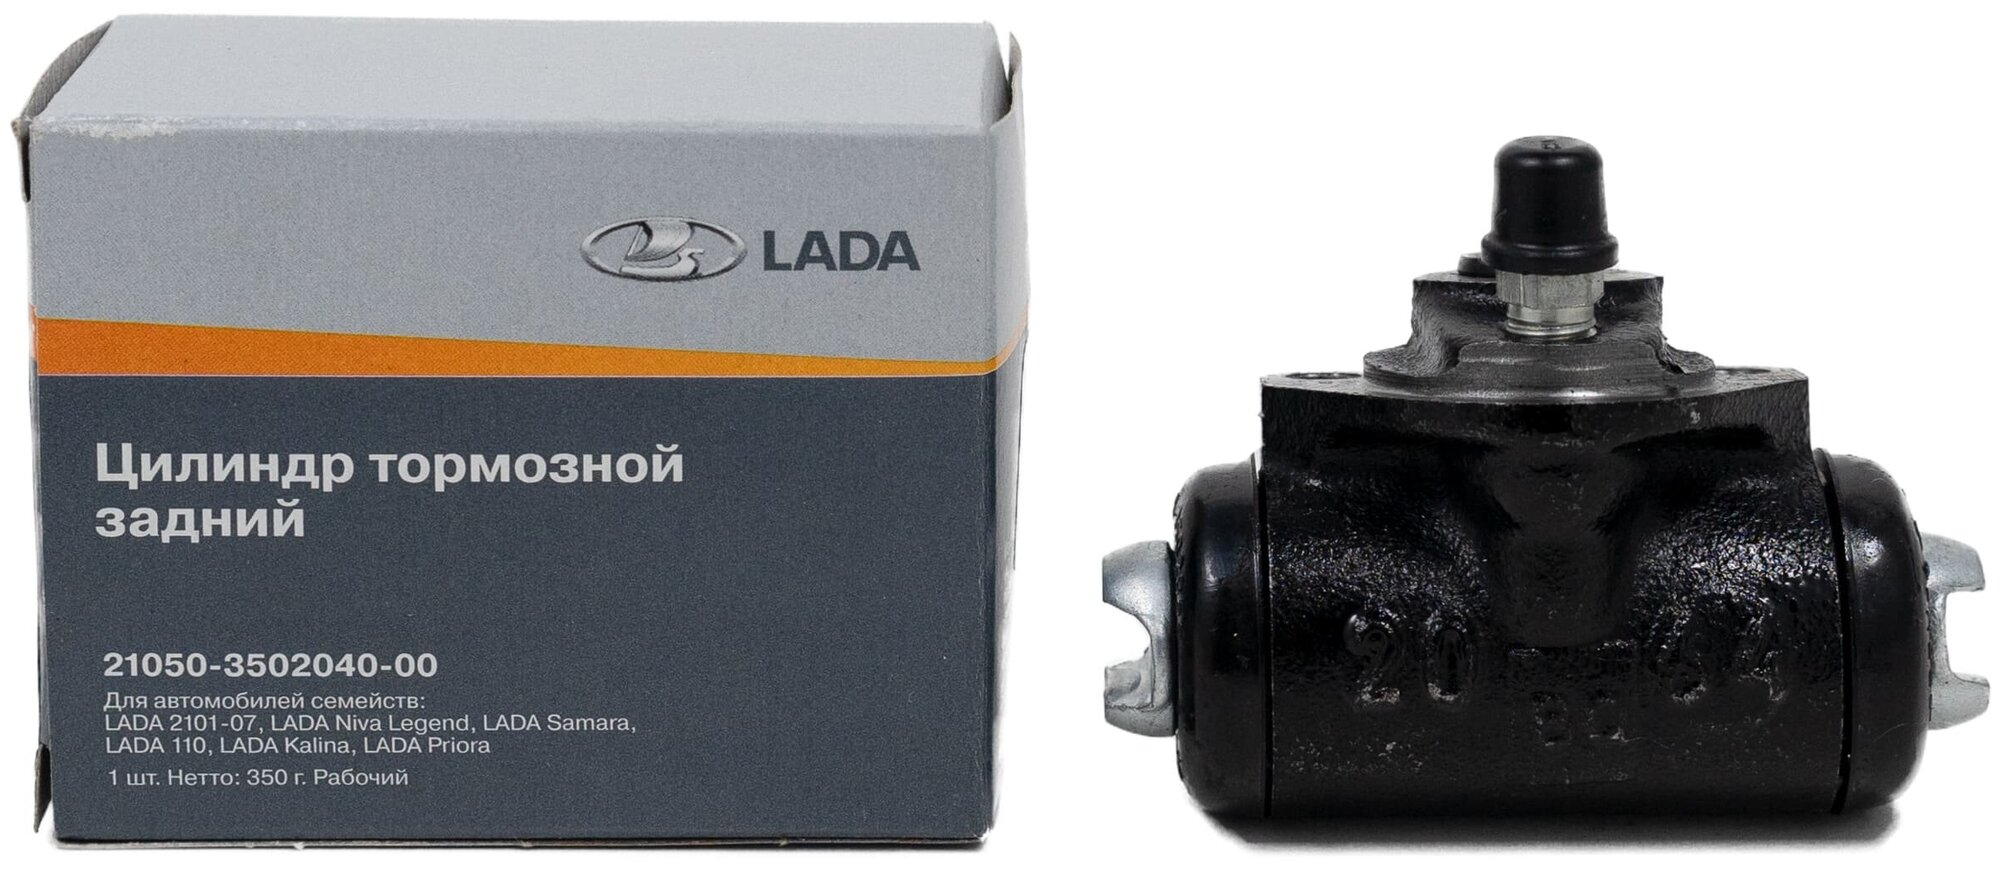 Цилиндр тормозной LADA 21050-3502040-00 задний